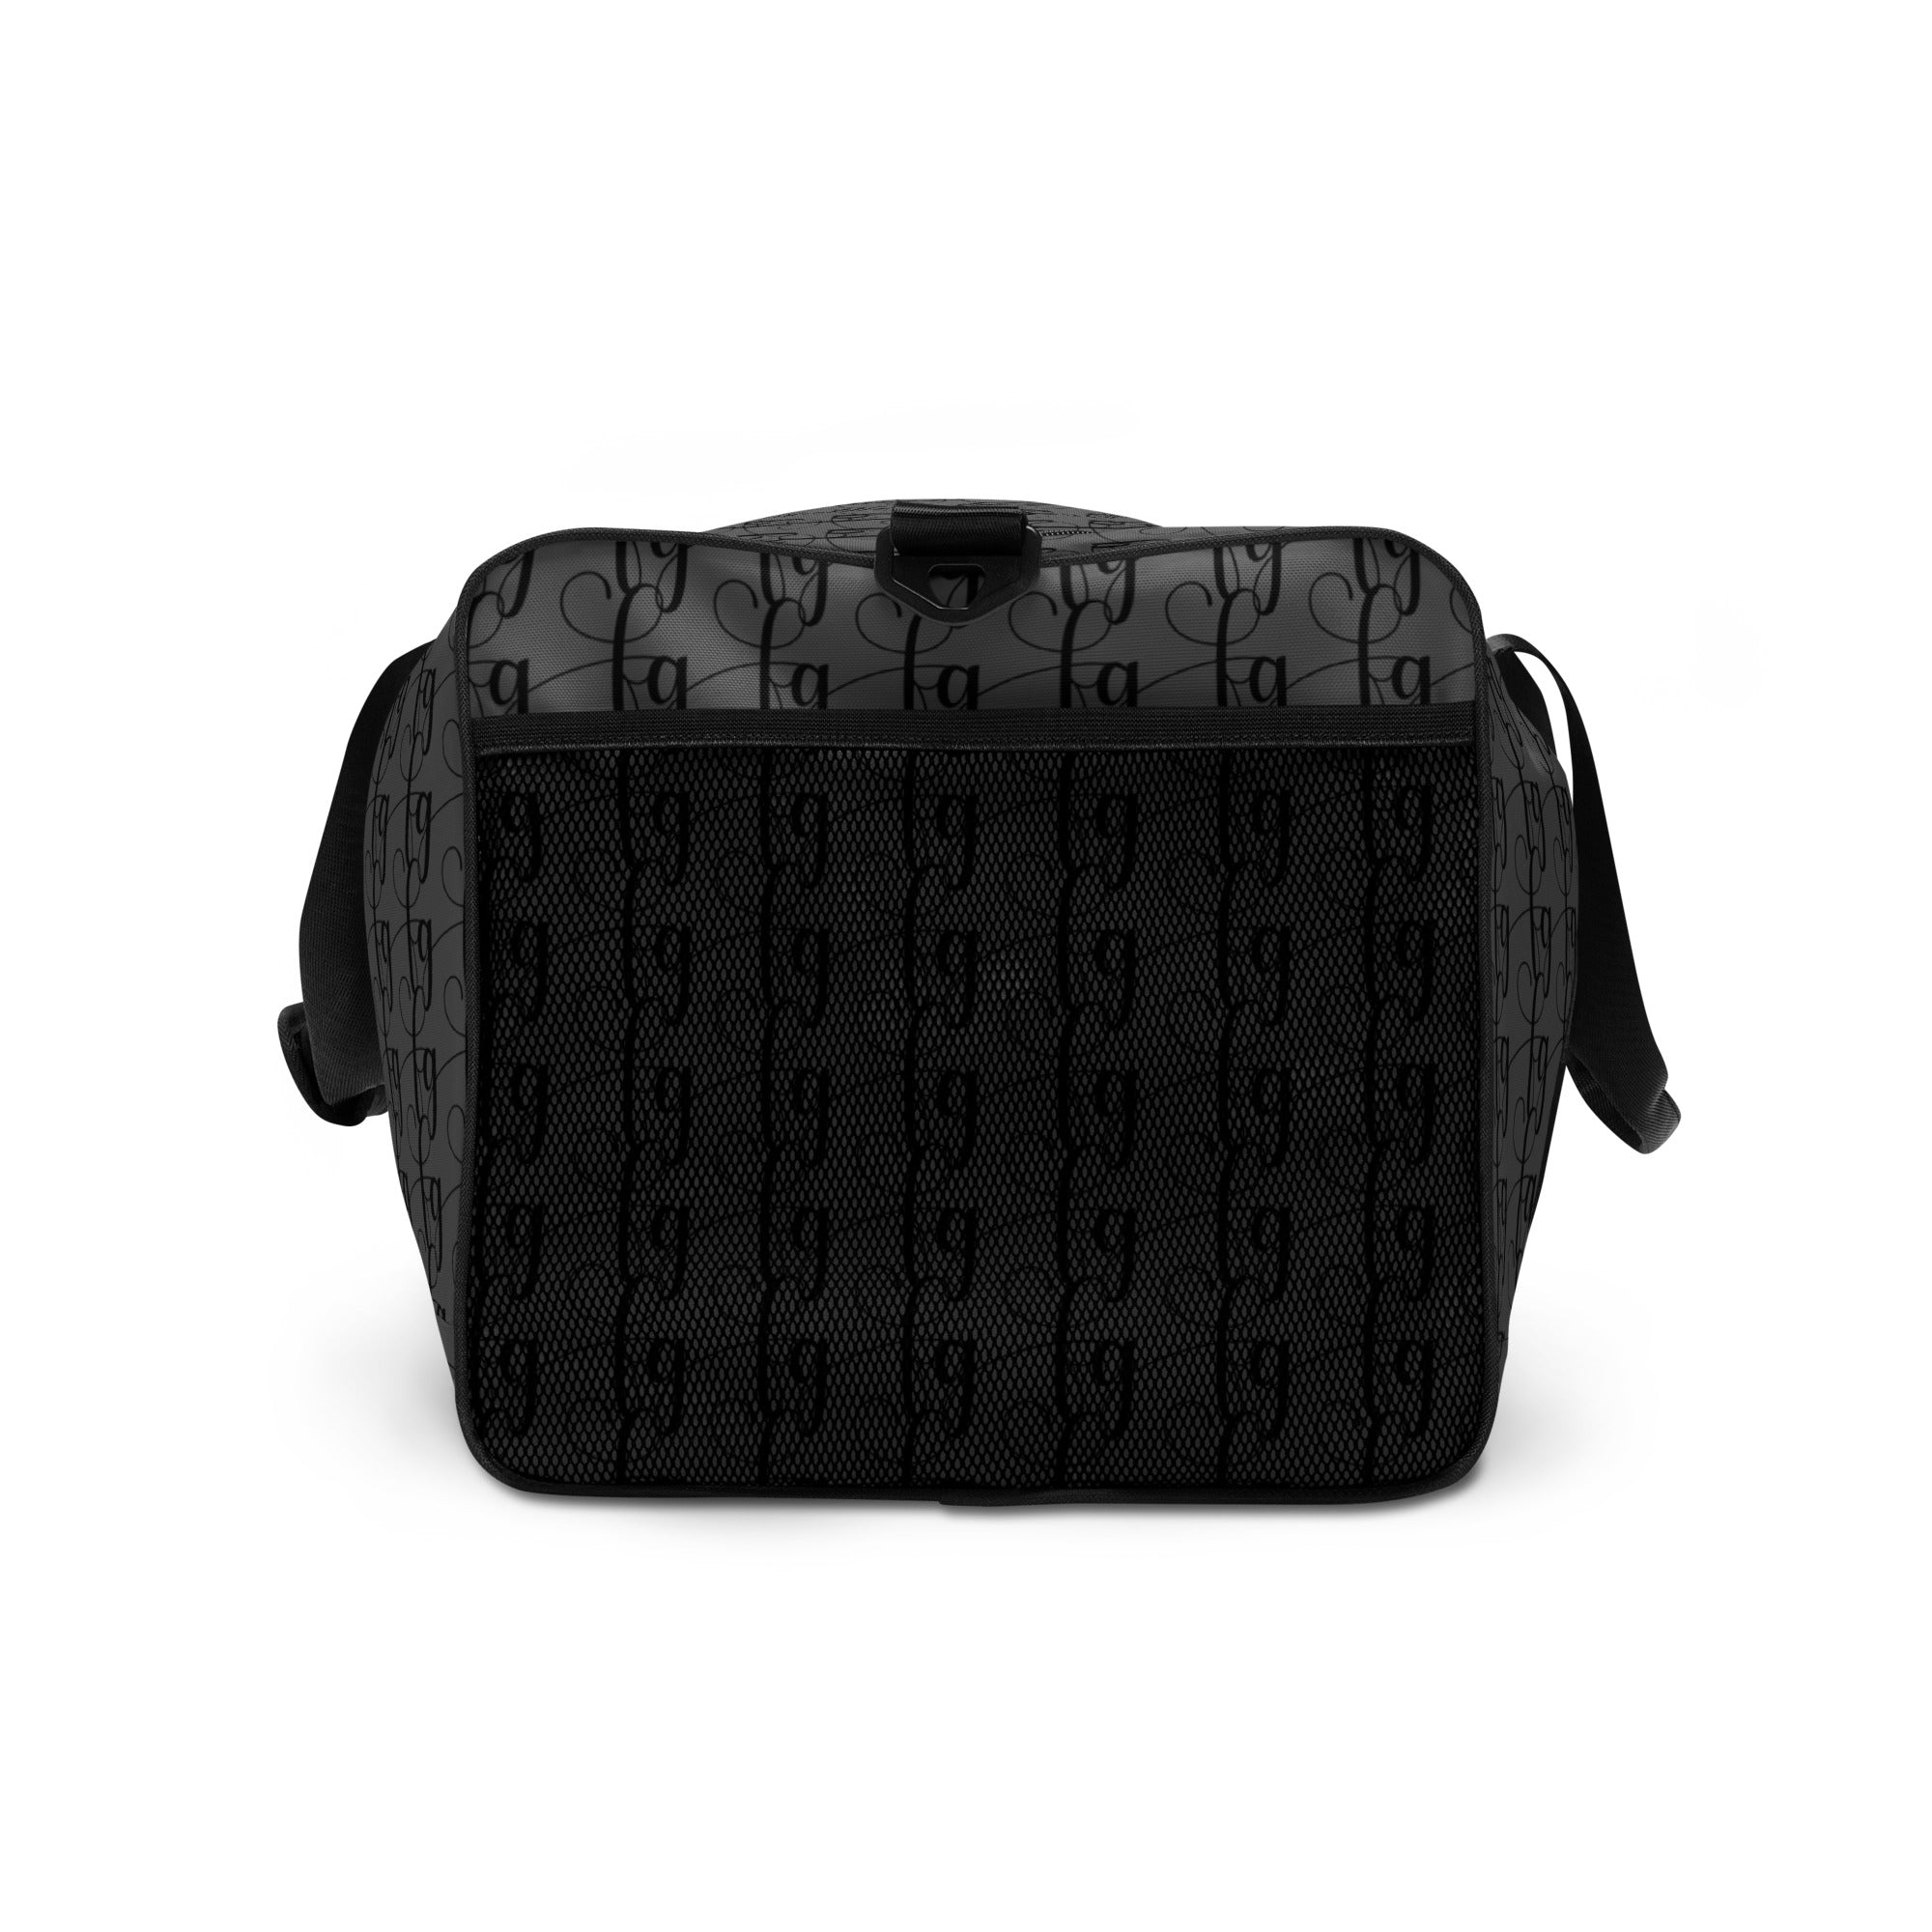 Gray / Black FG Blocked Duffle bag - FleekGoddess